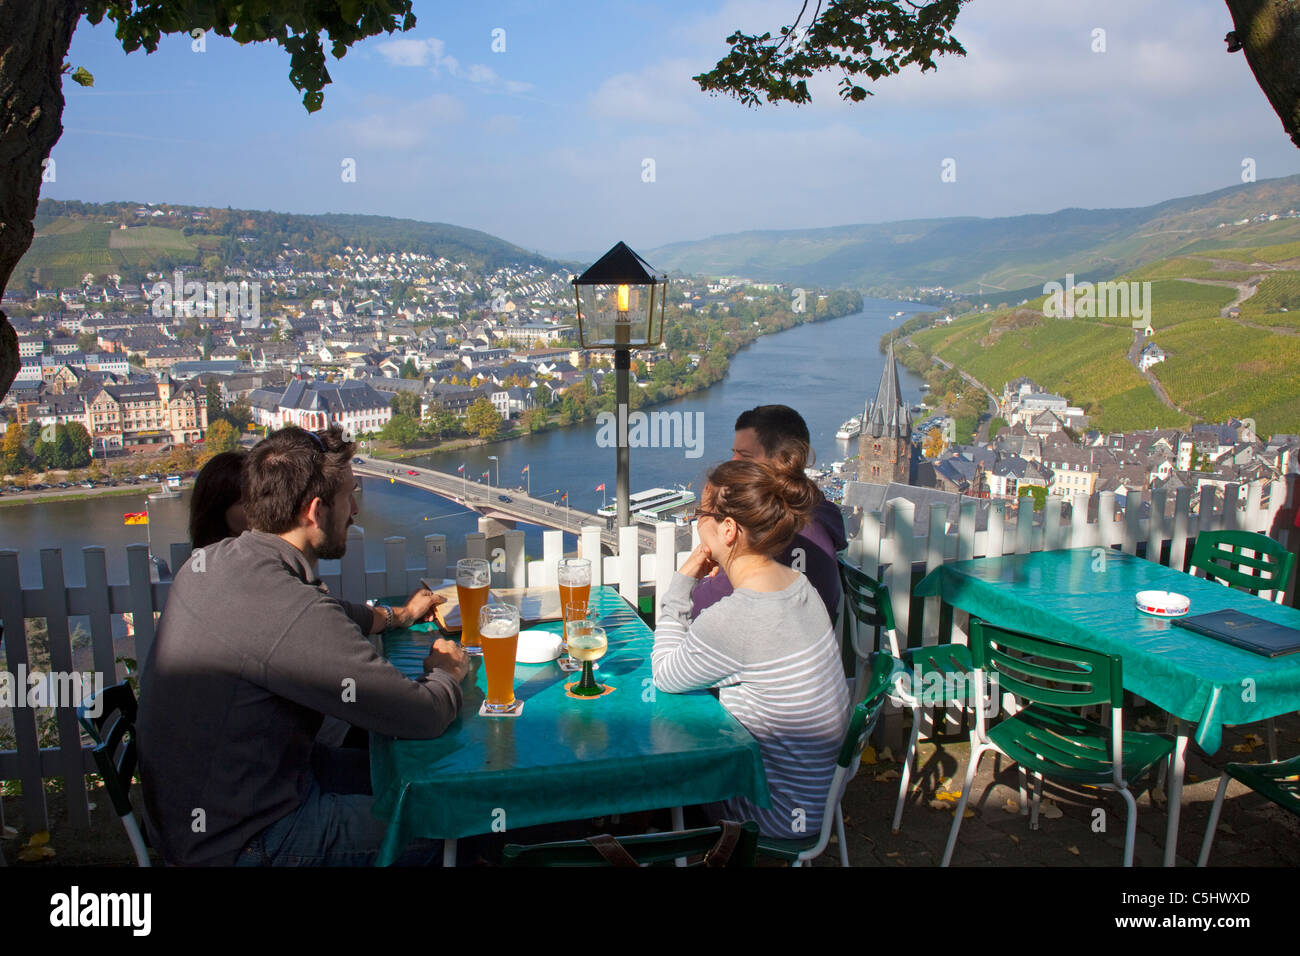 Touristen in einem Ausflugslokal nahe der Burg Landshut bei Bernkastel-Kues, People in a tavern with view over the Moselle Stock Photo